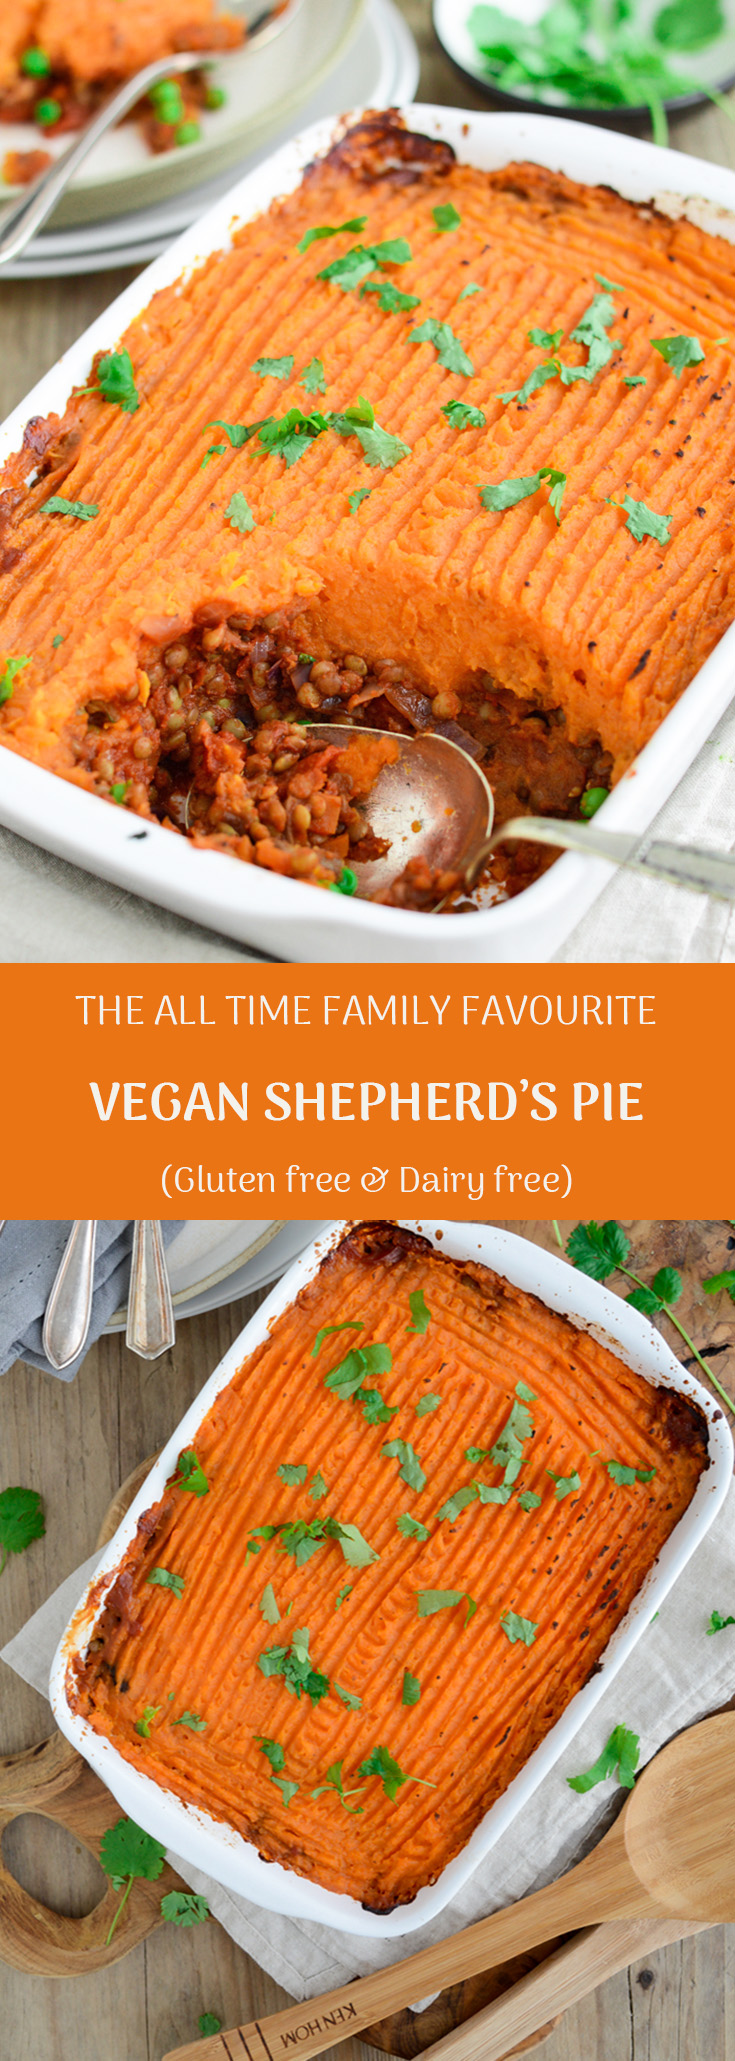 Vegan shepherd’s pie #shepherdspie #veganpie #vegandinner #familydinner #comfortfood via @fit.foodie.nutter